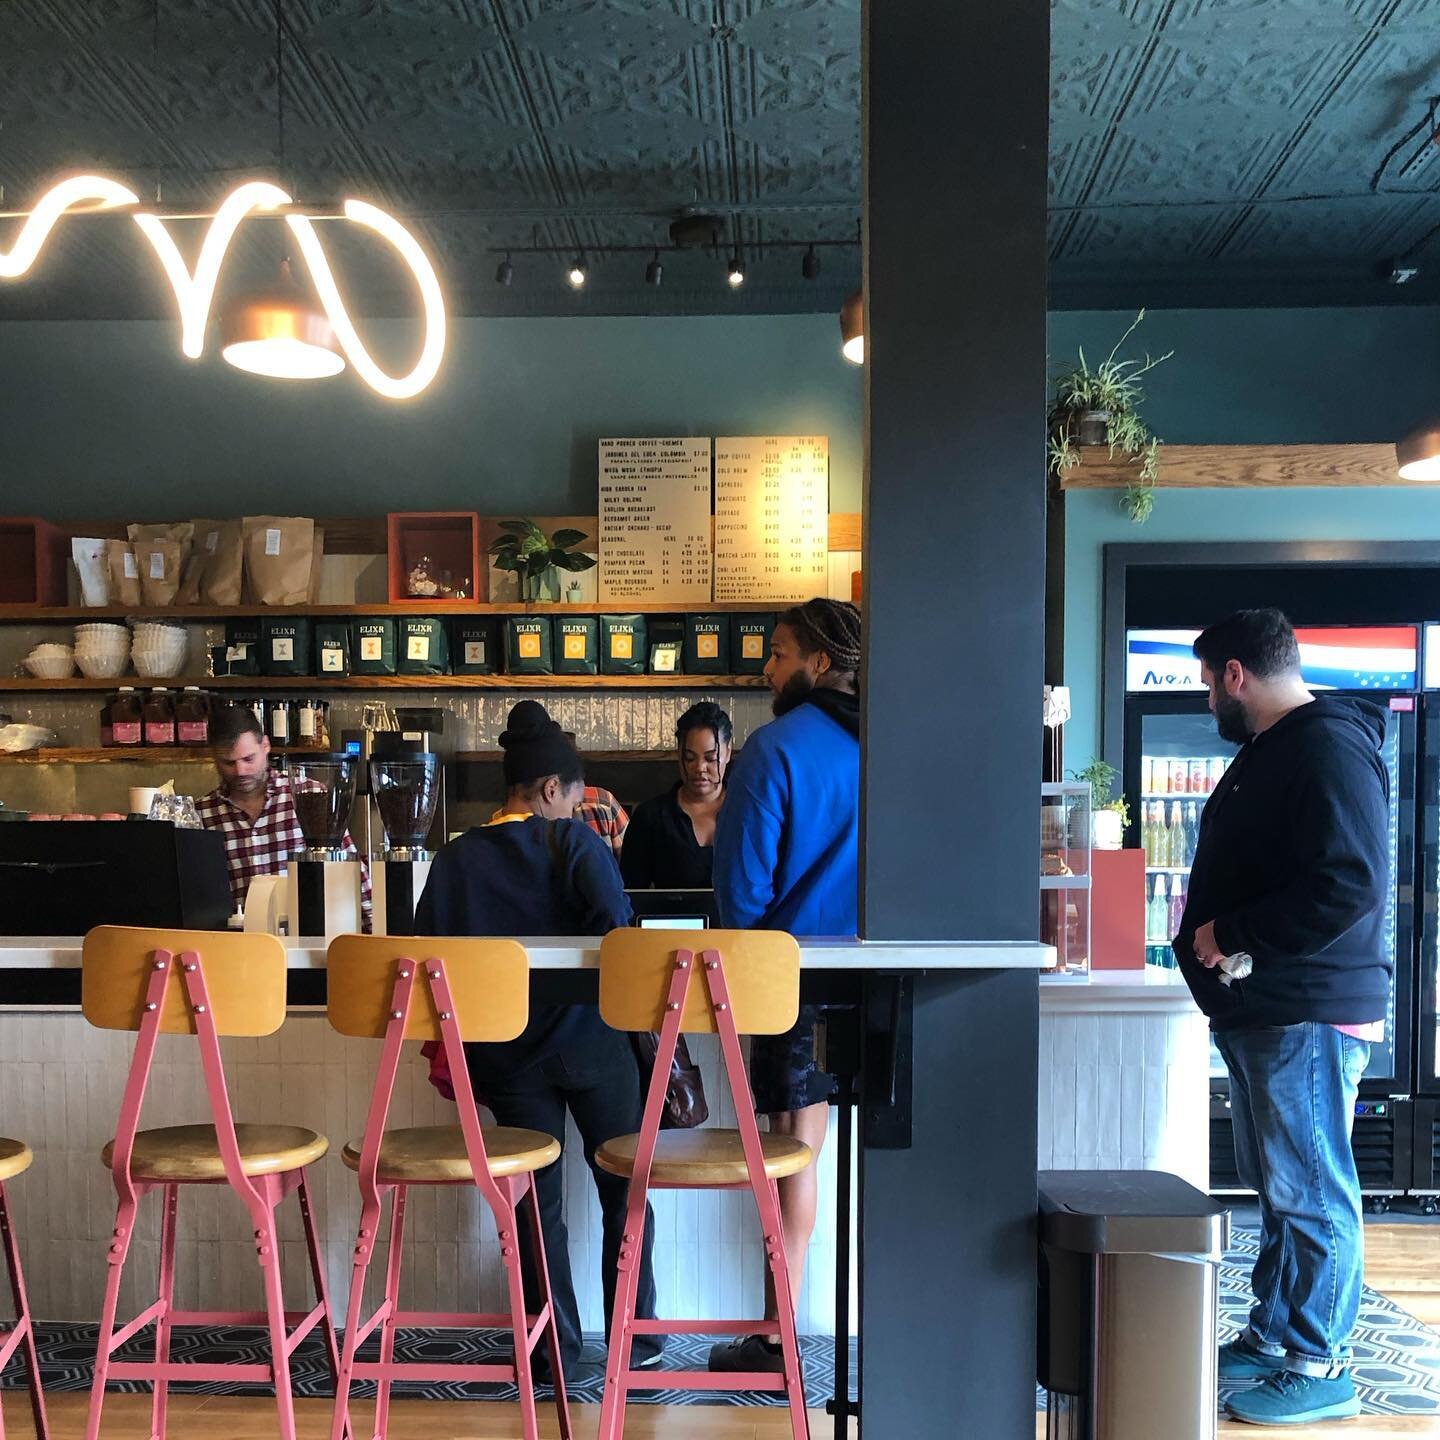 Soft opening @koma_cafe today! 

#natalietokicdesign #hospitalitydesign #interiordesign #coffeeshop #komacafe